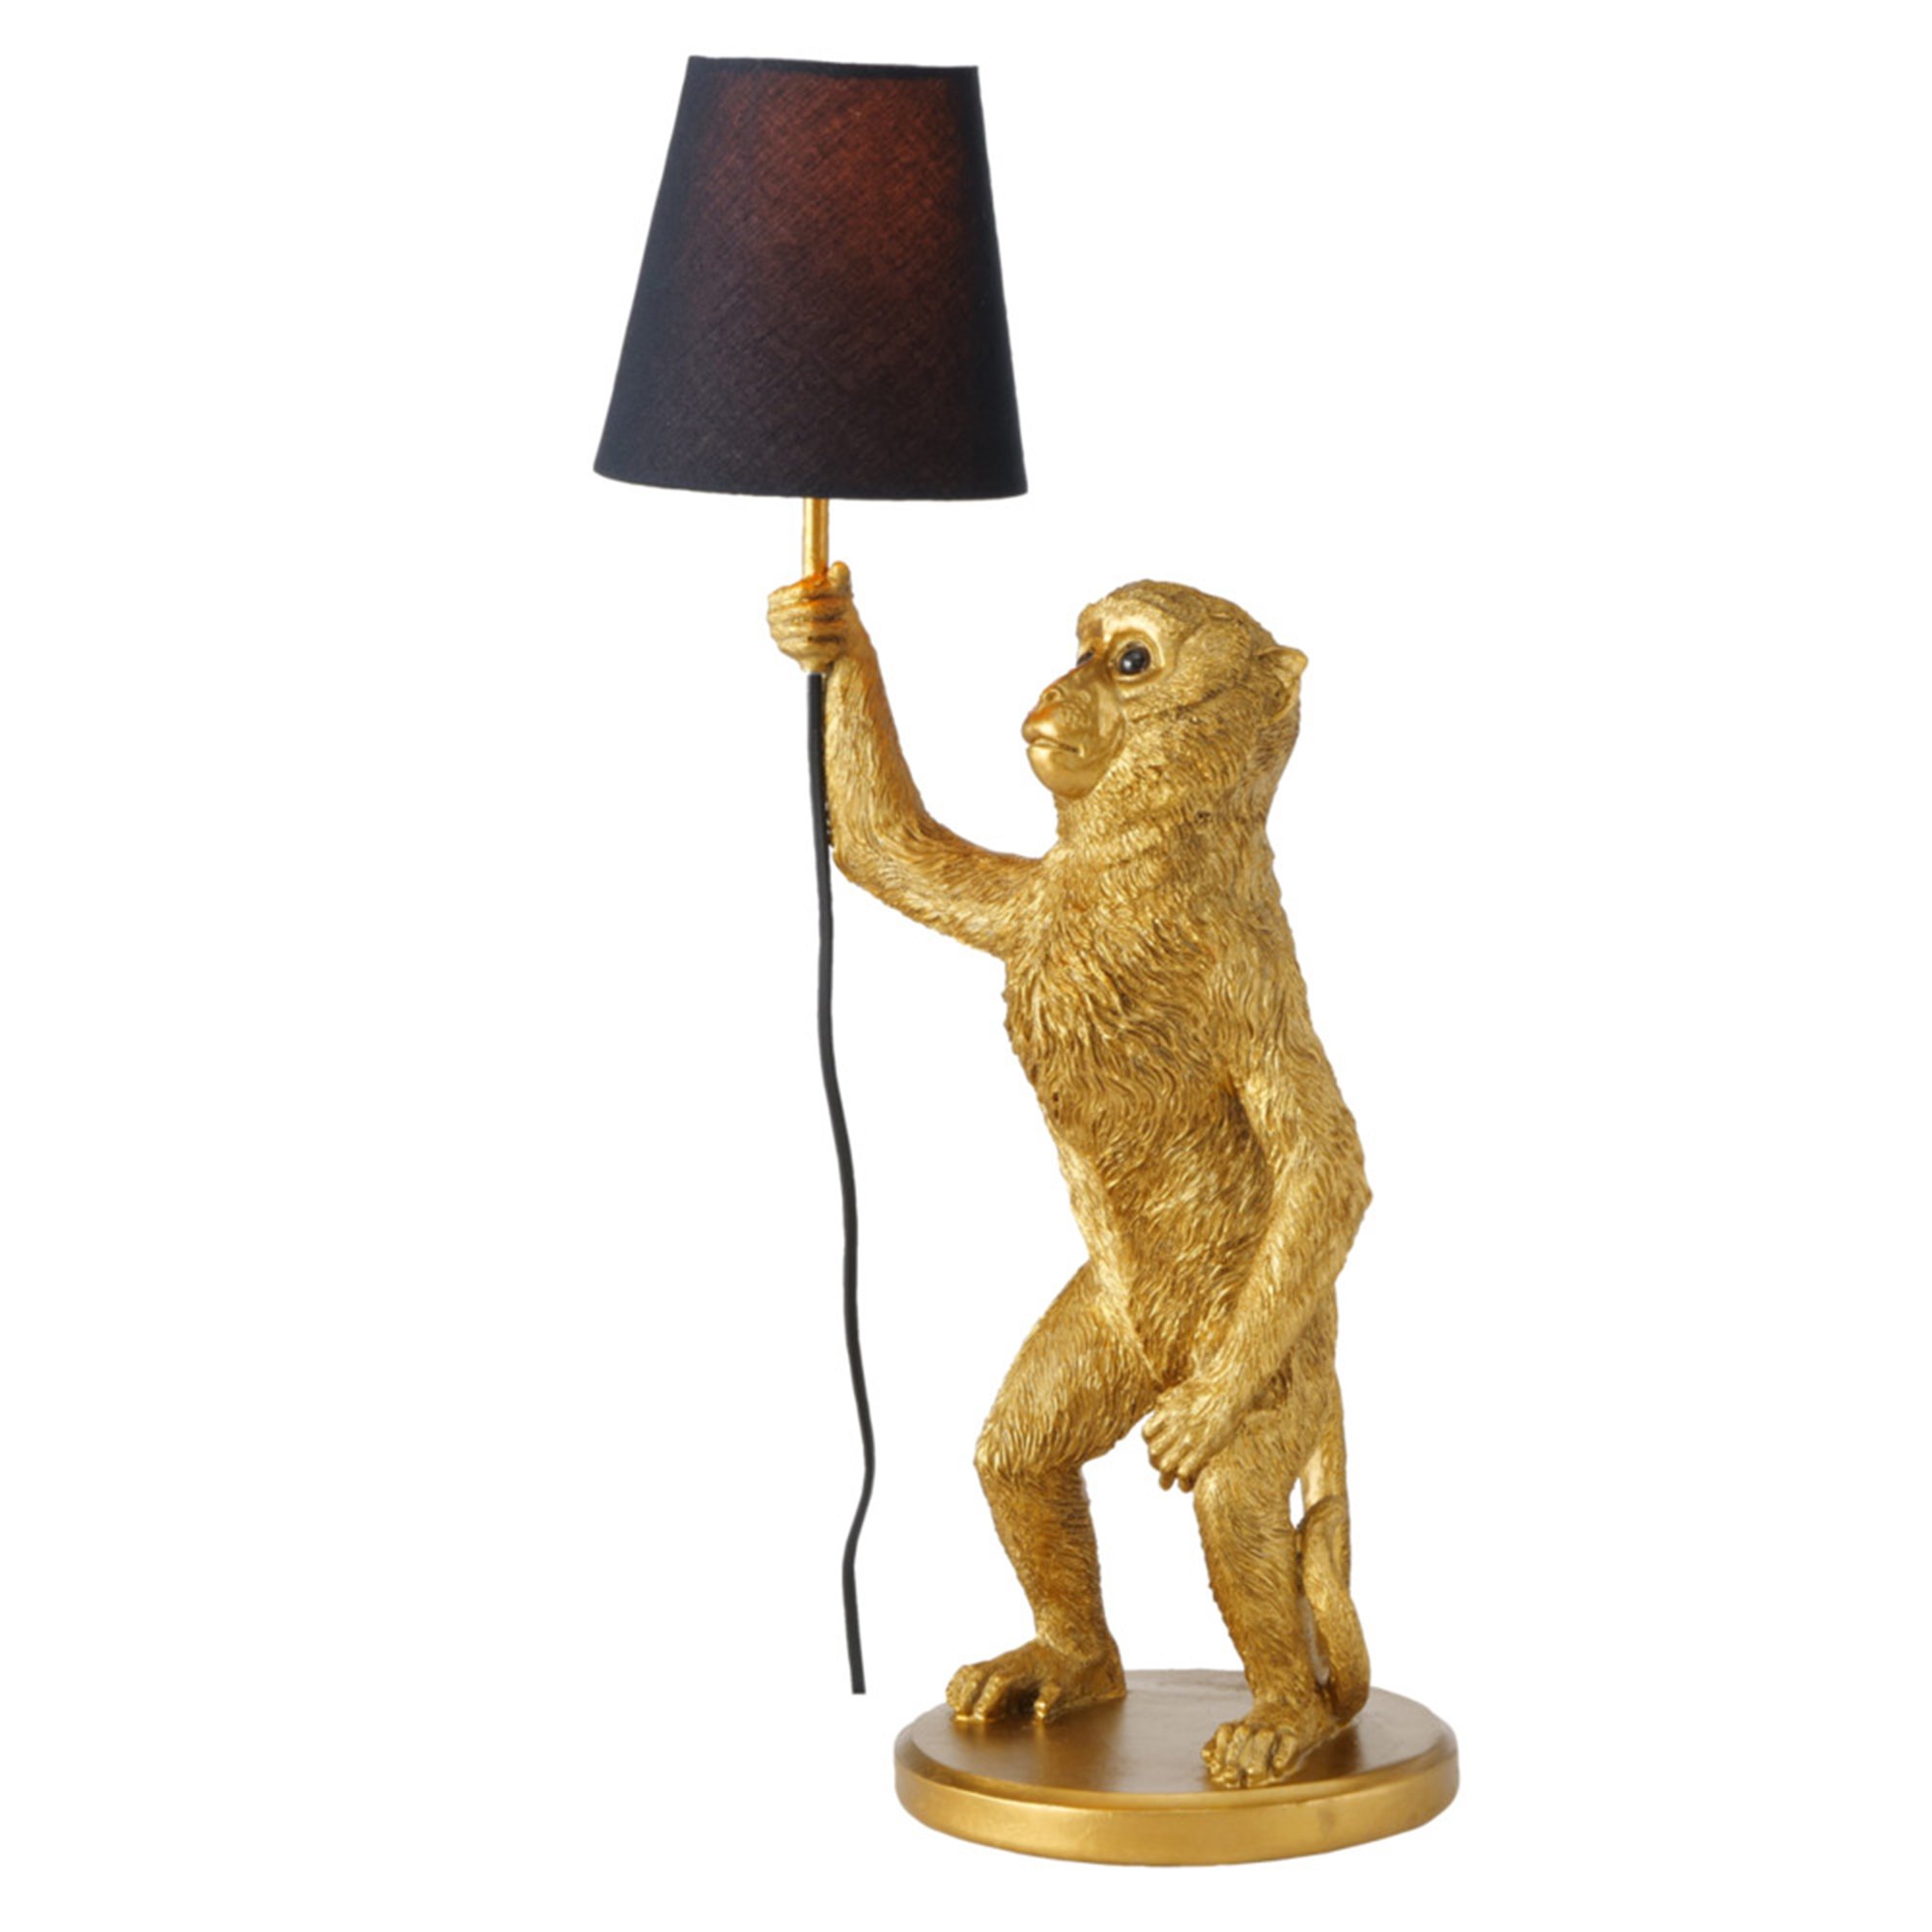 Standing Monkey Table Lamp, Gold | Barker & Stonehouse